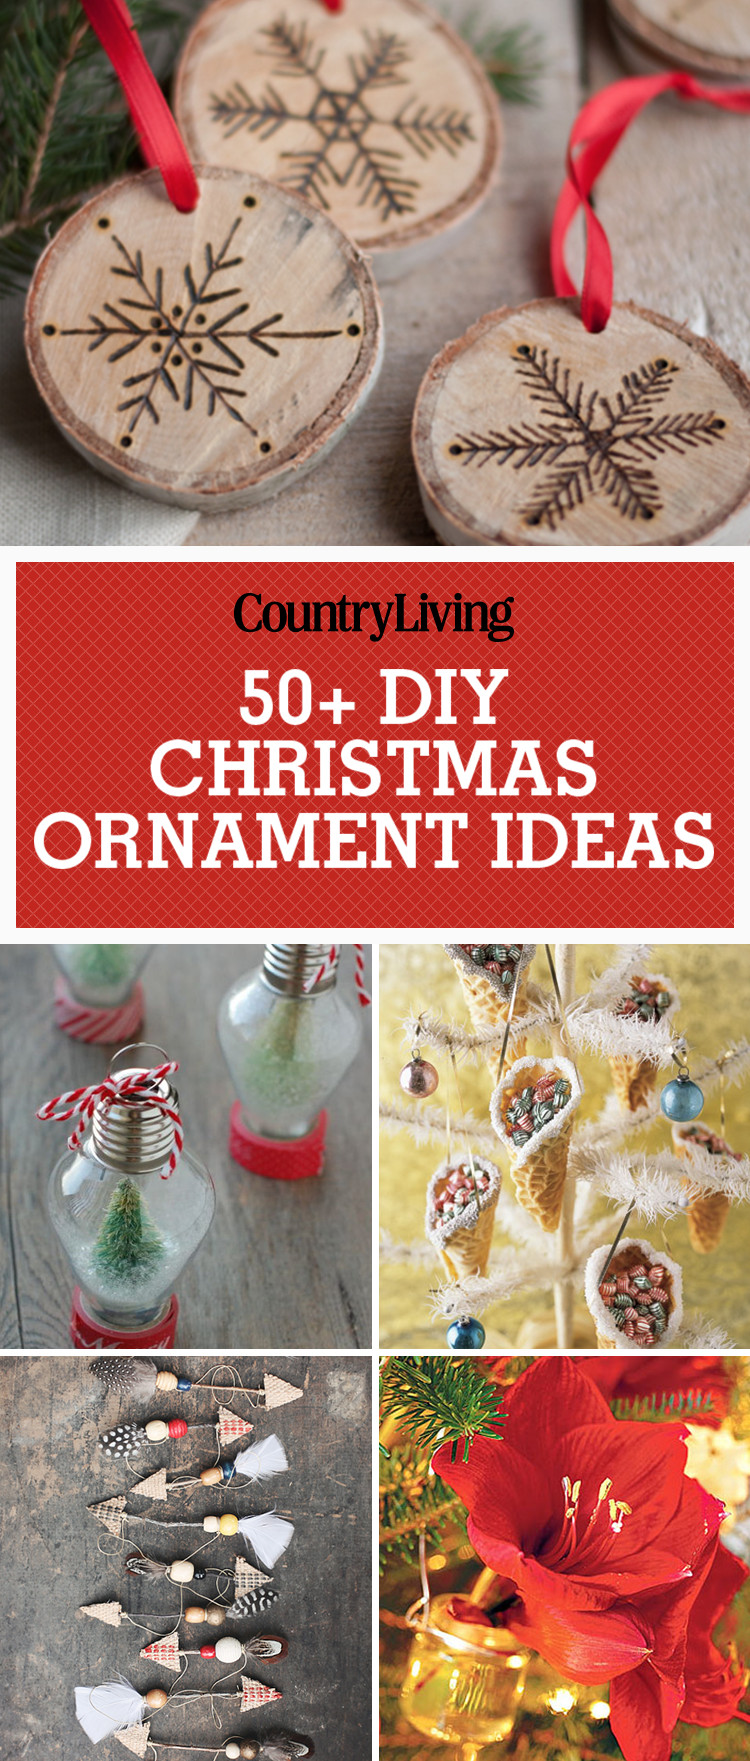 Christmas Ornaments DIY
 55 Homemade Christmas Ornaments DIY Crafts with